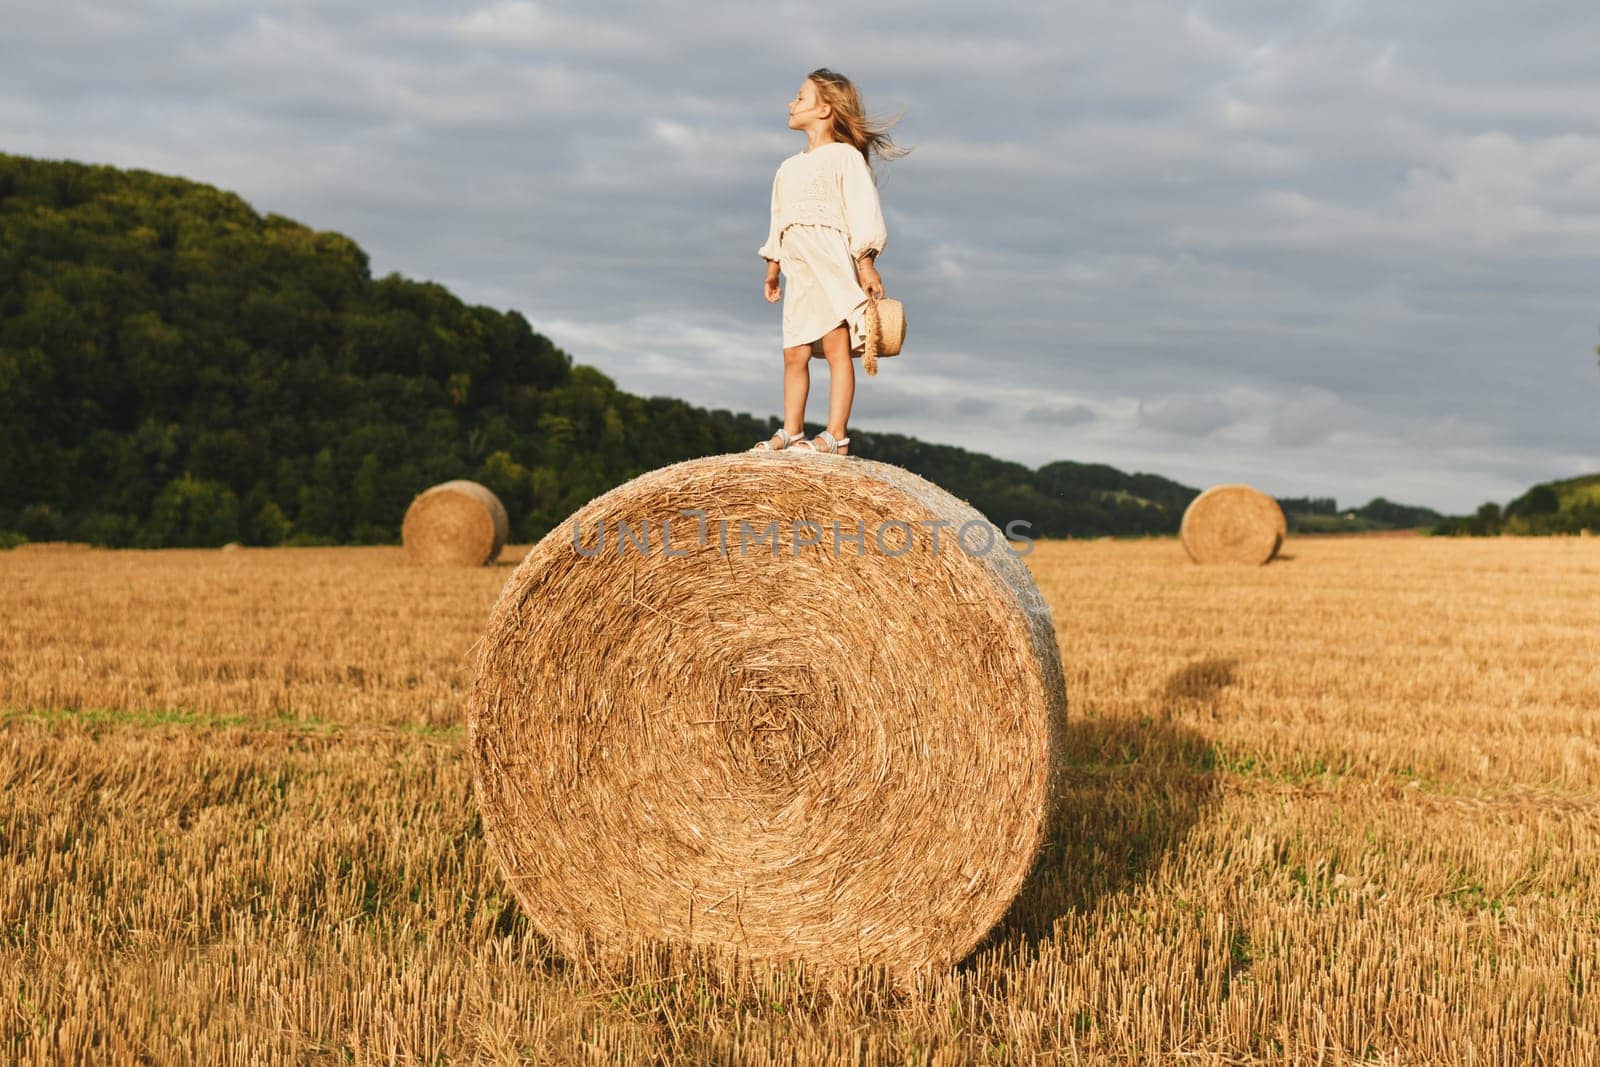 A girl on a bale of wheat by Godi